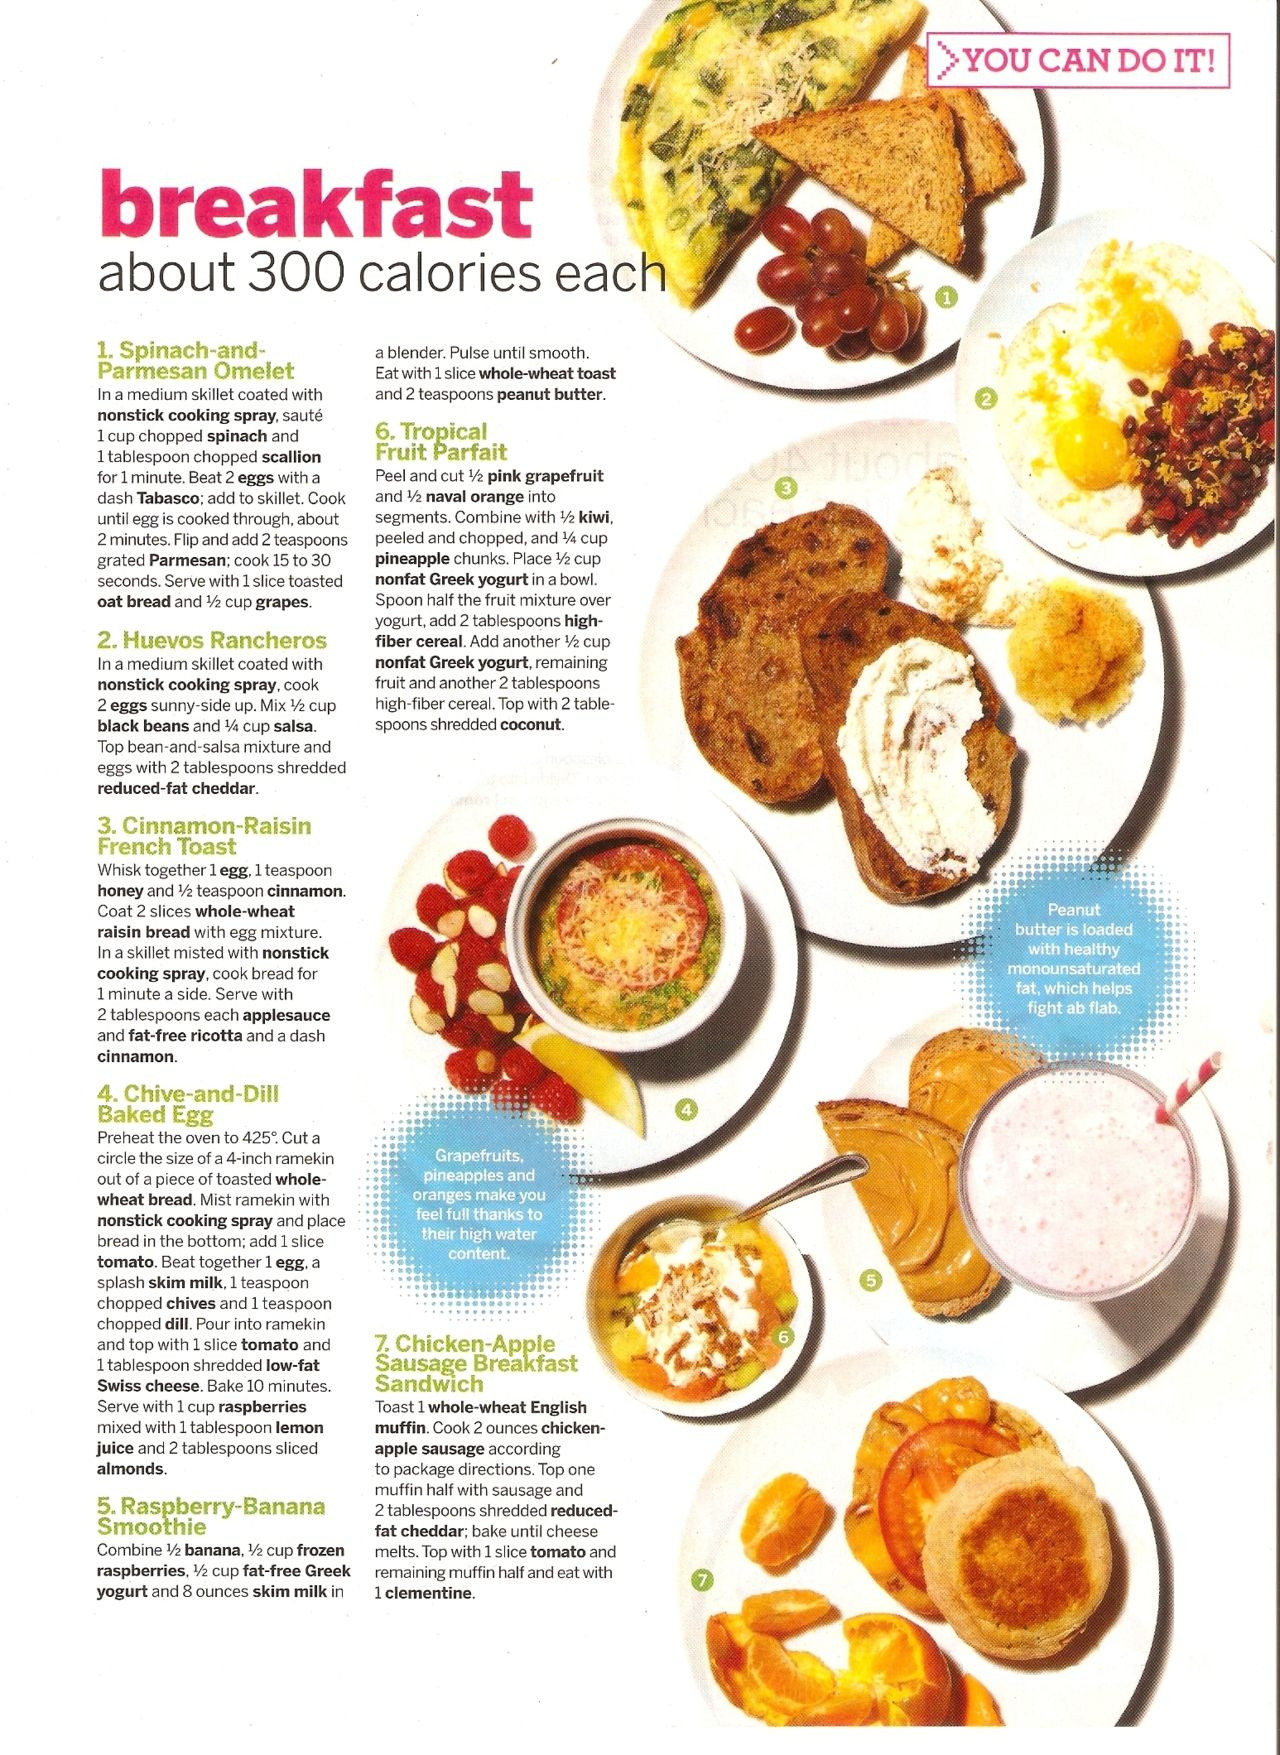 Breakfast Ideas Healthy Low Calories Diets
 Low calorie breakfasts I ♥ healthy eating